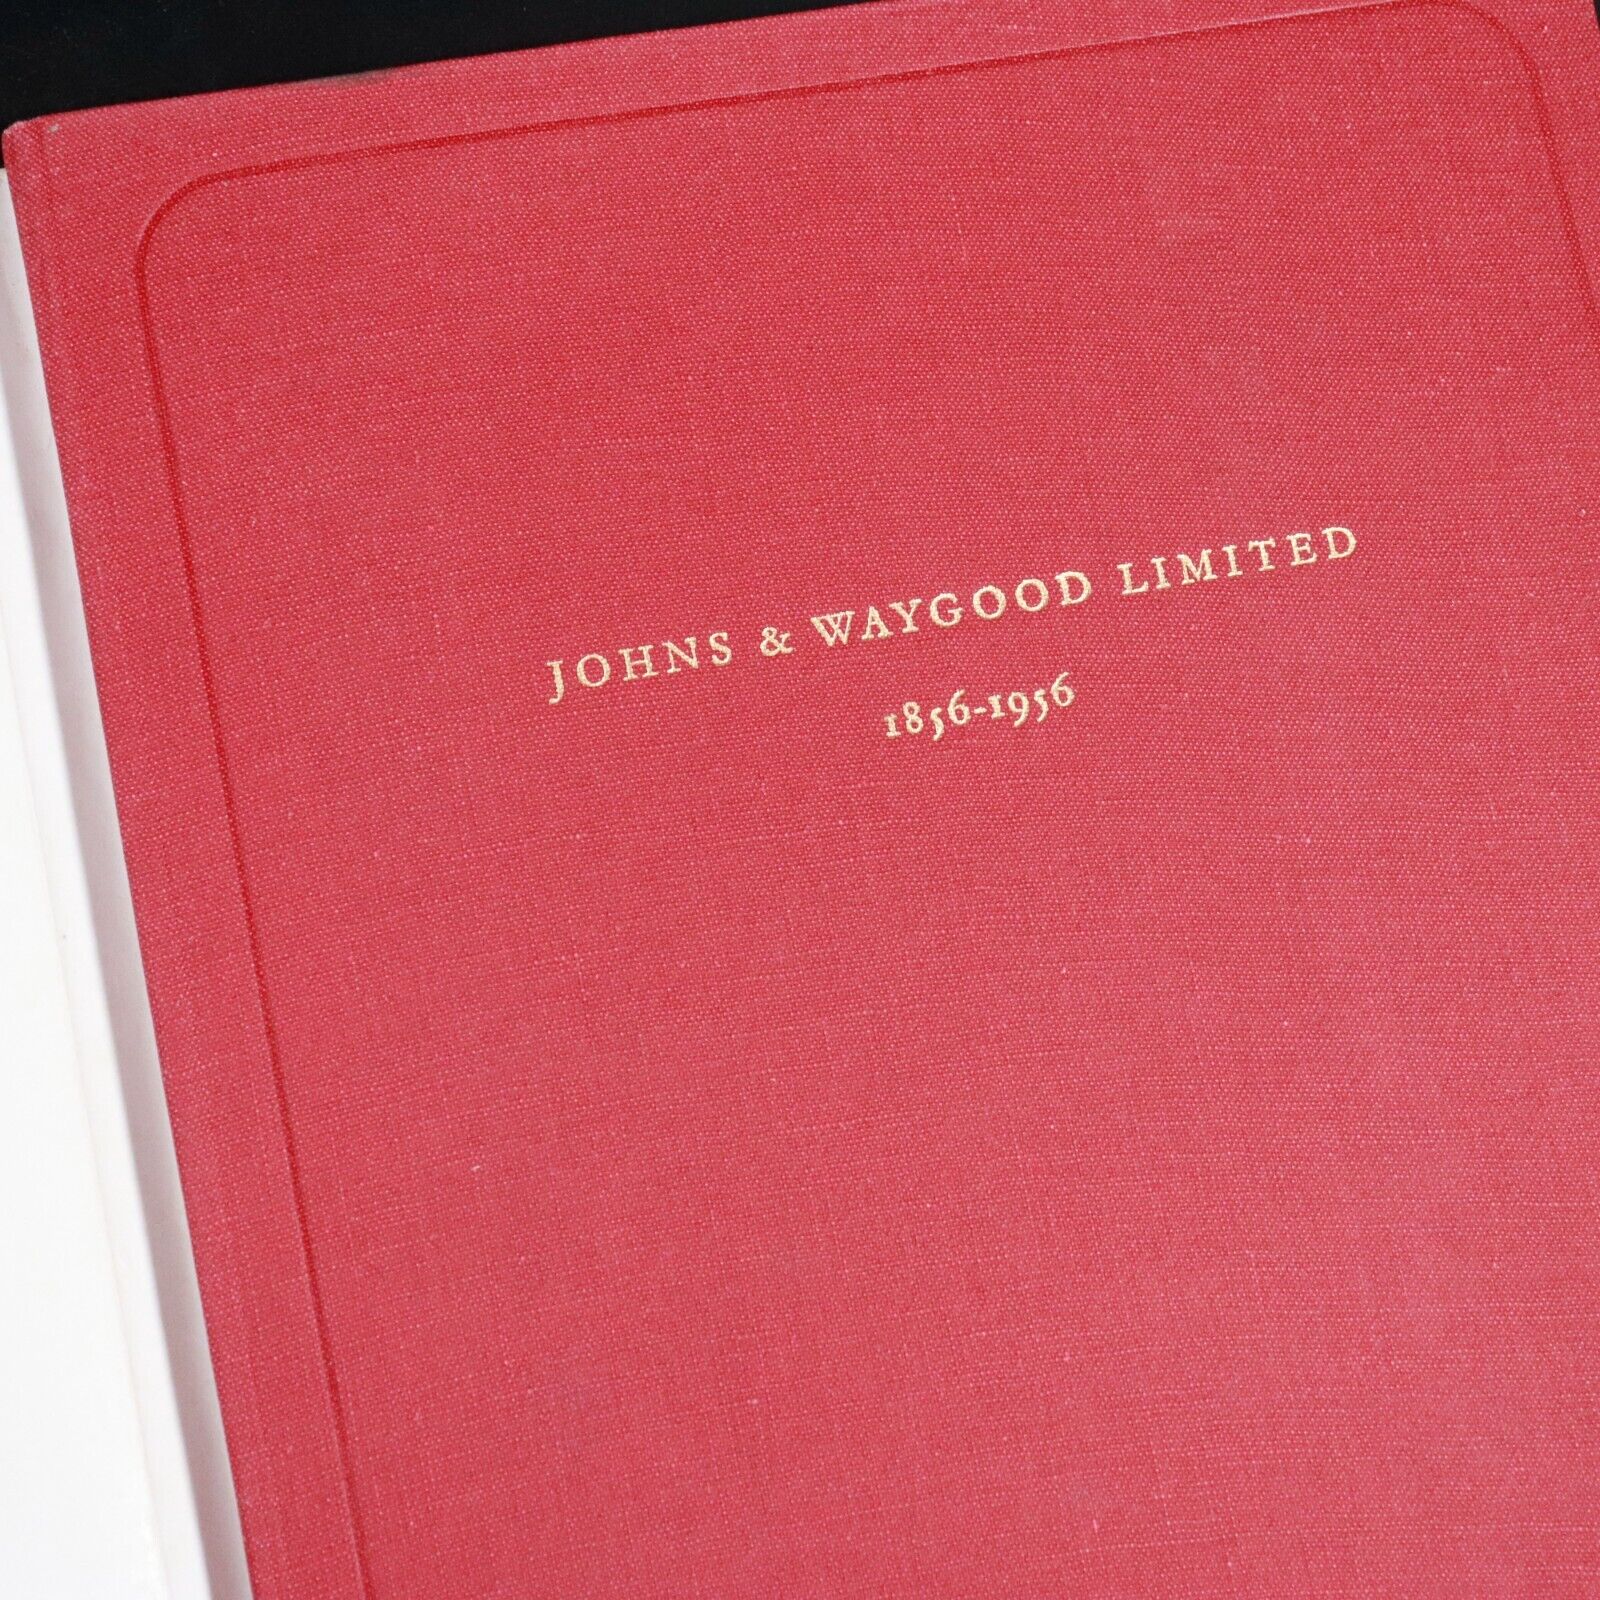 1956 Johns & Waygood Limited 1856-1956 Geoffrey Blainey Australian History Book